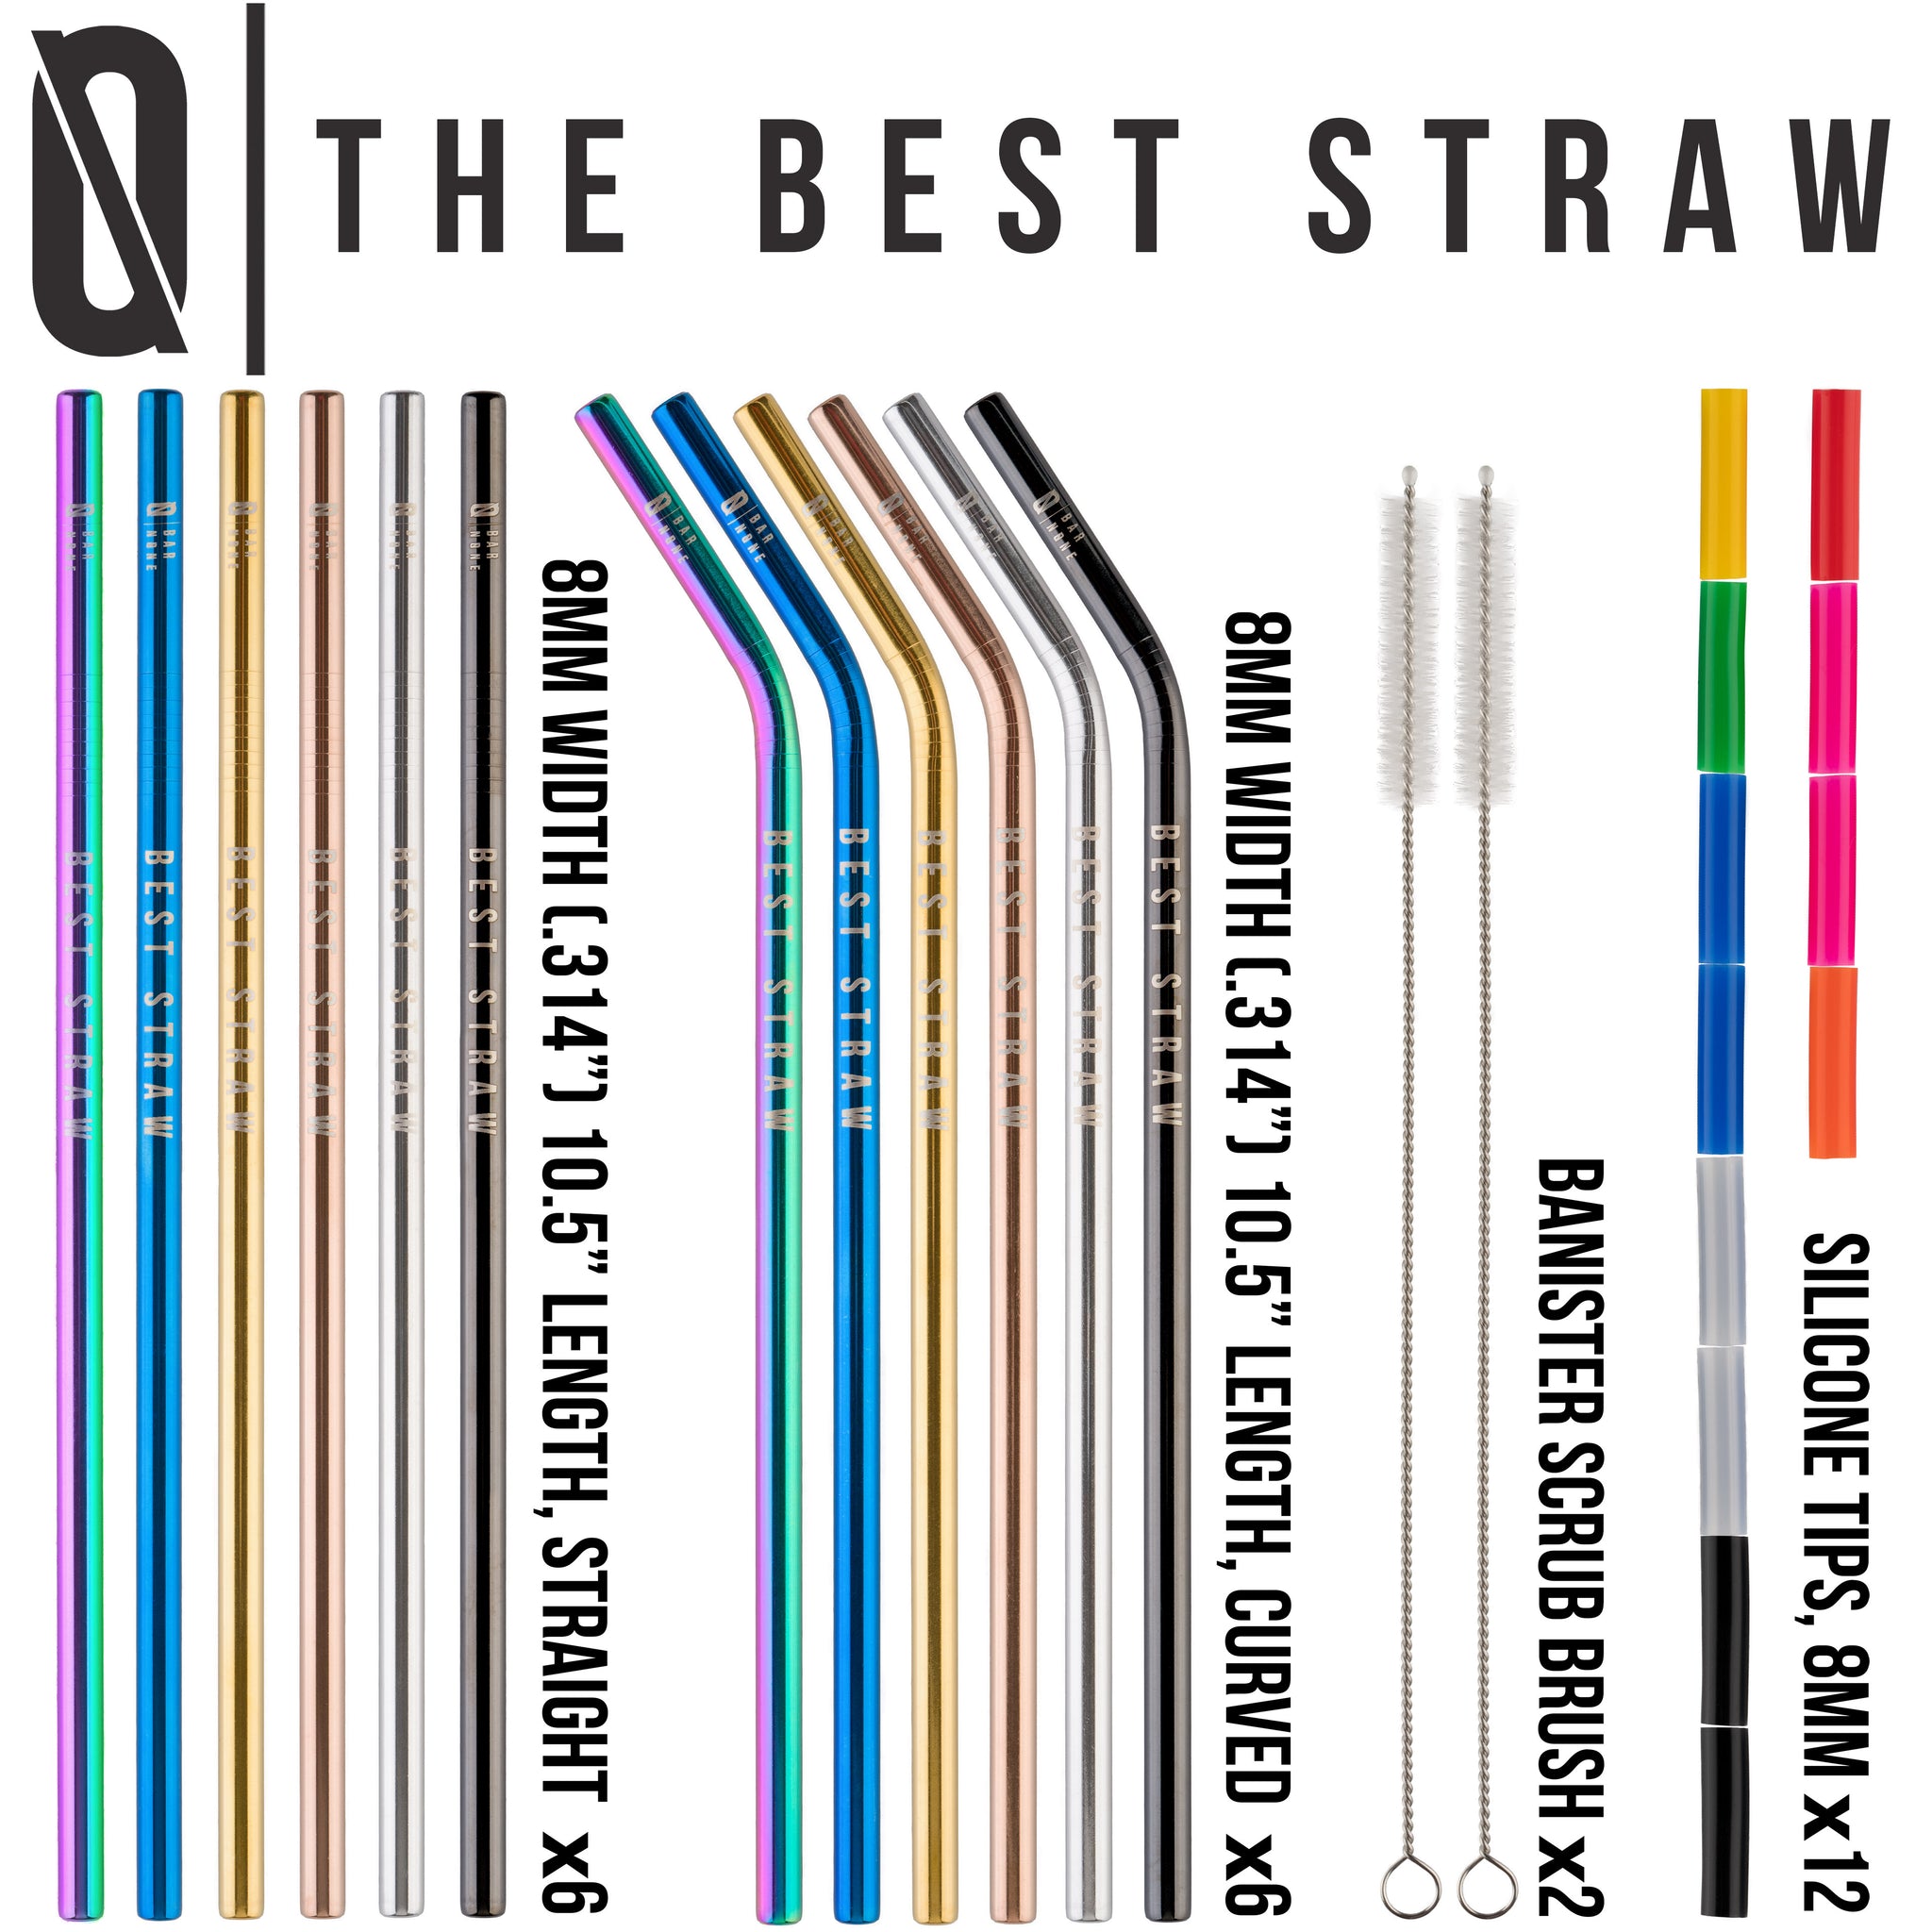 Straw Crown Small Straws Next On Stock Photo 1552192274